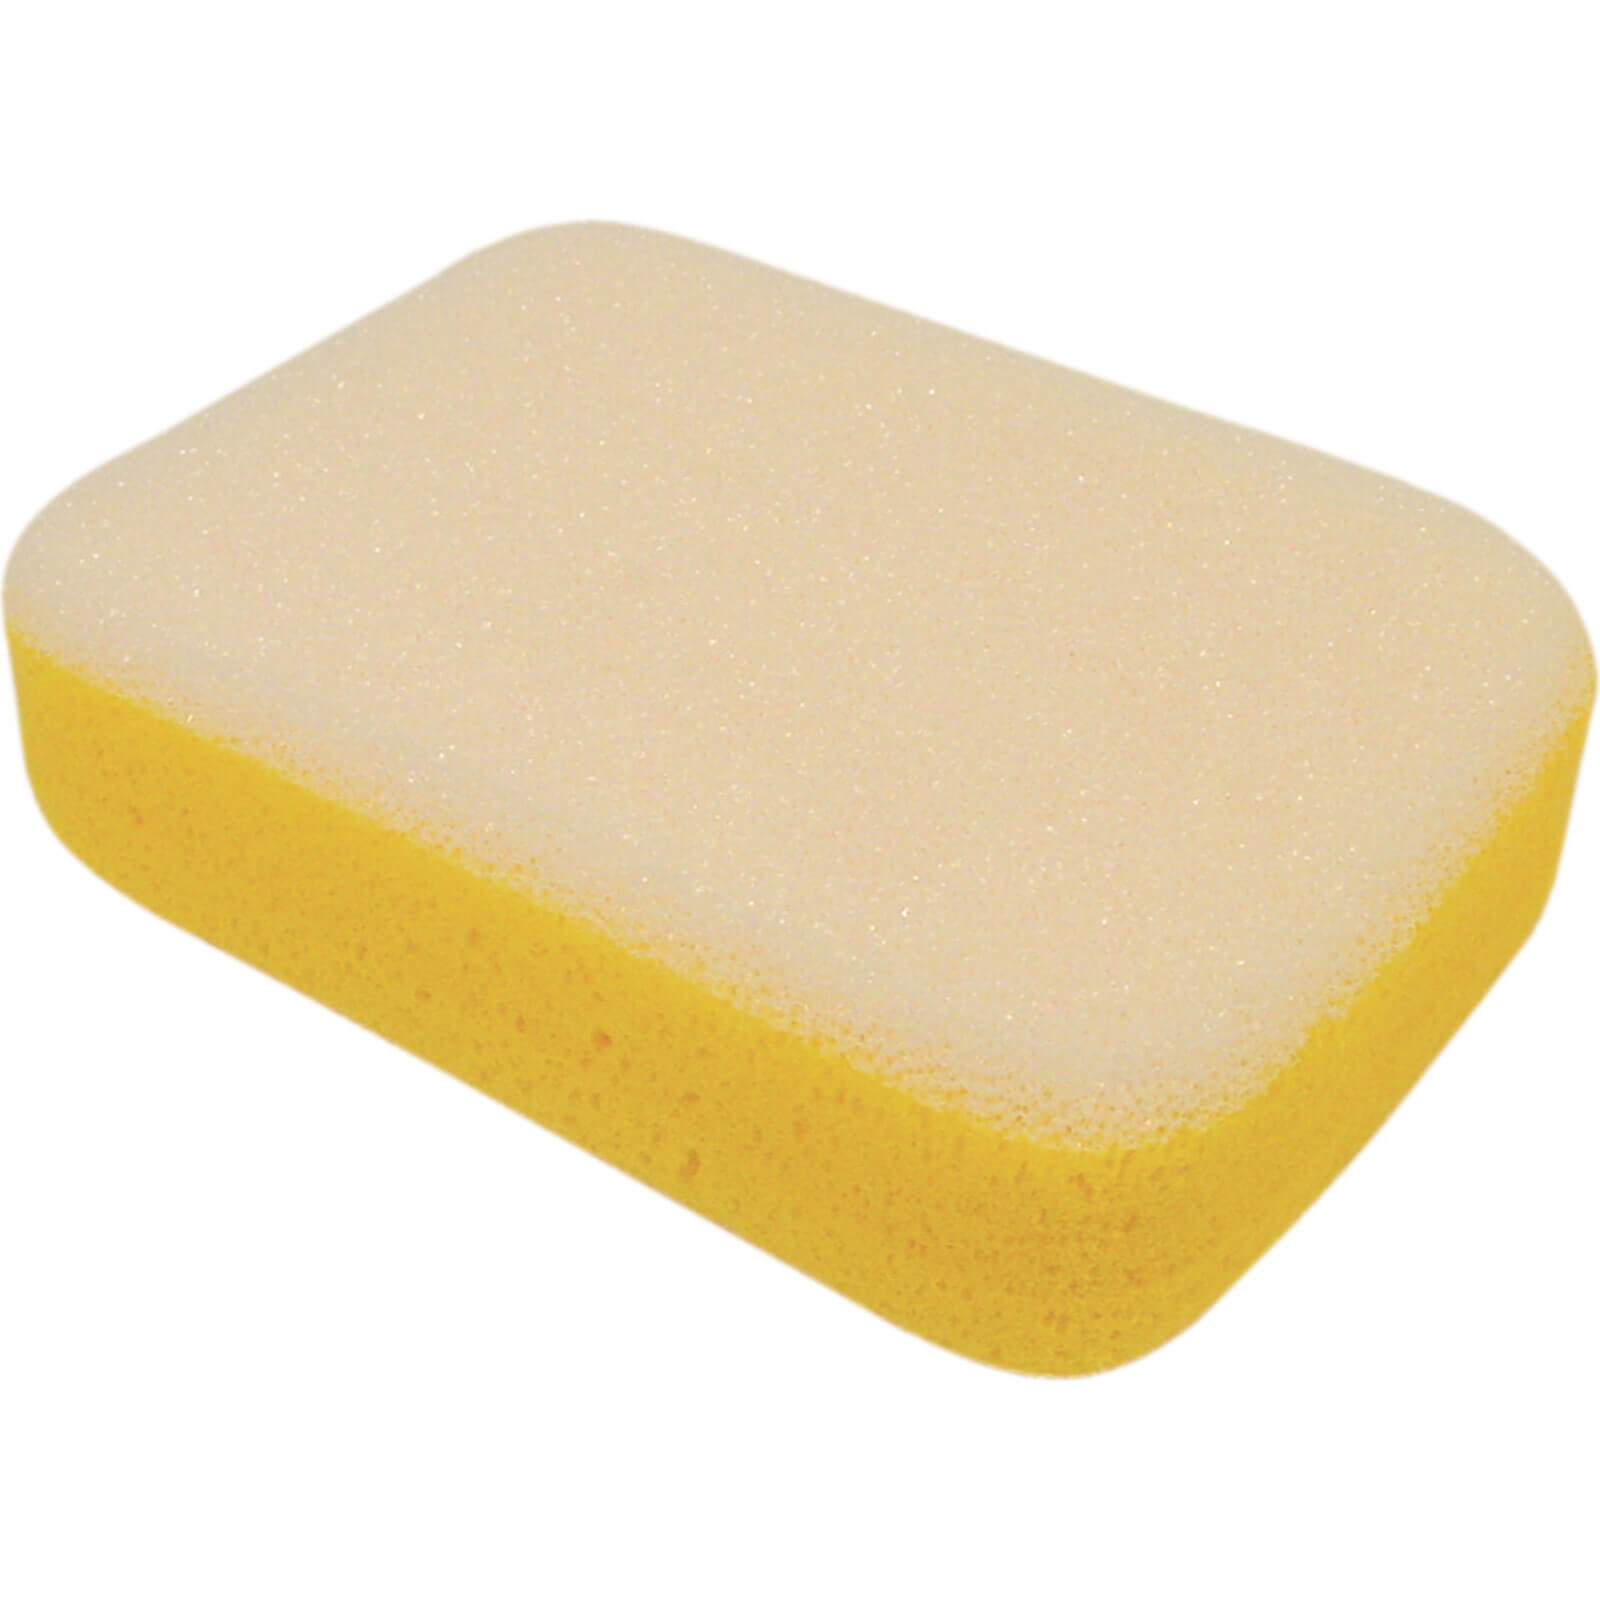 Photo of Vitrex Grouting Sponge